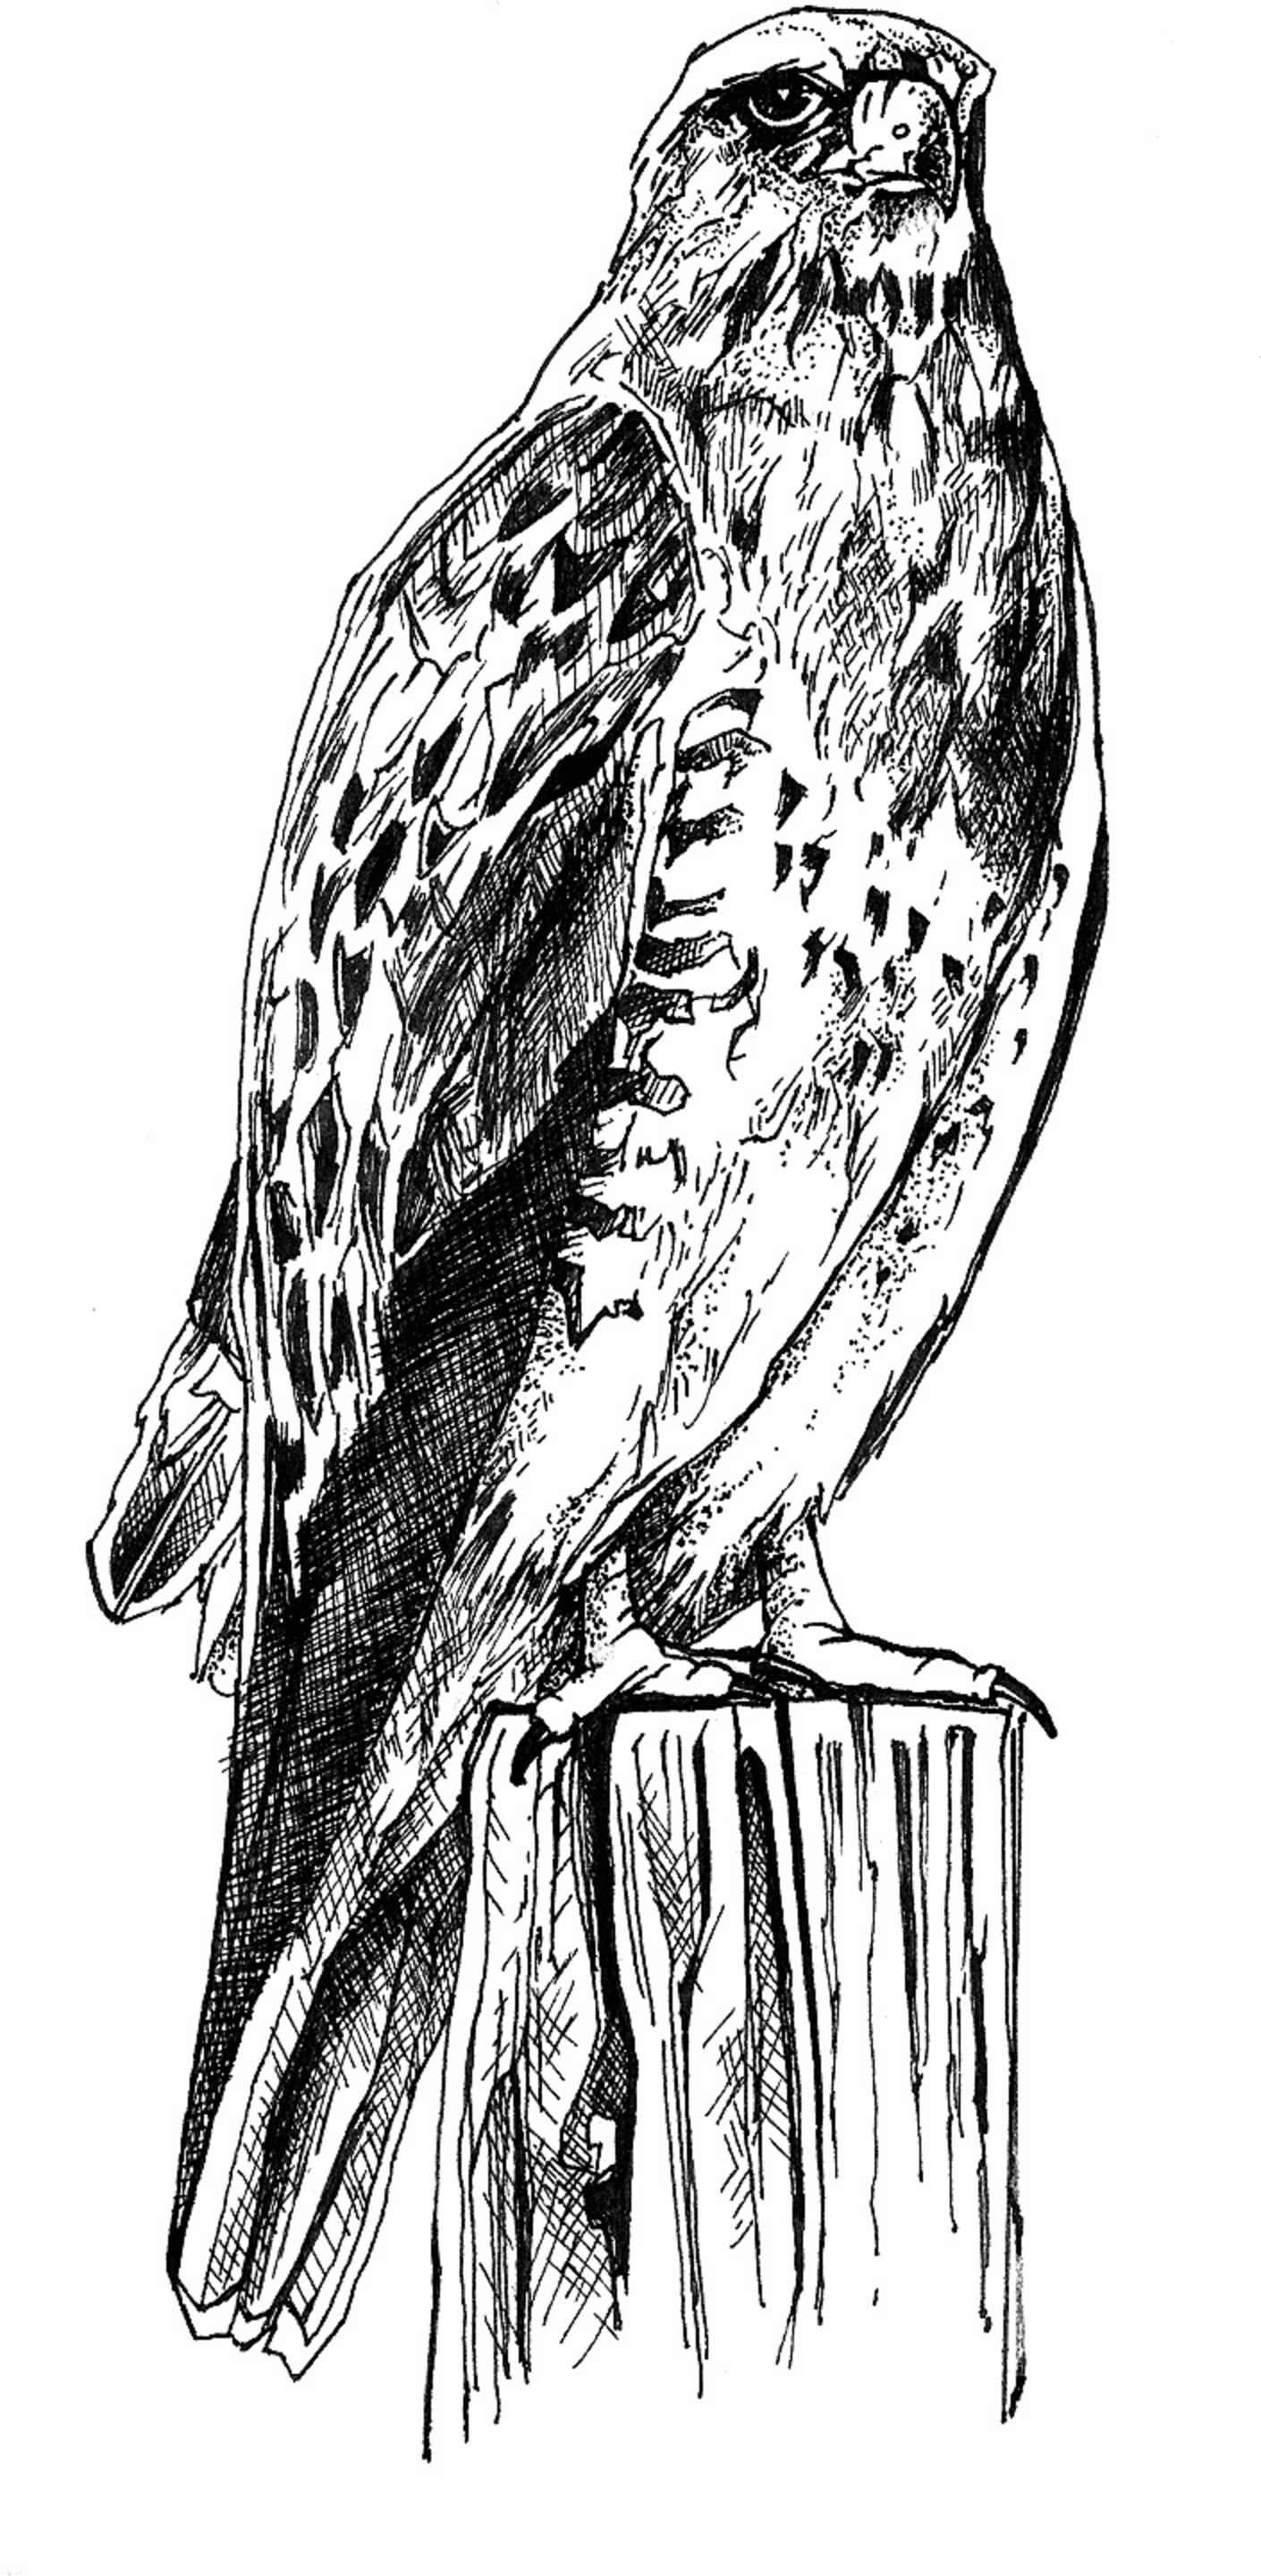 File:Black and white line art drawing of bird body.jpg - Wikimedia ...